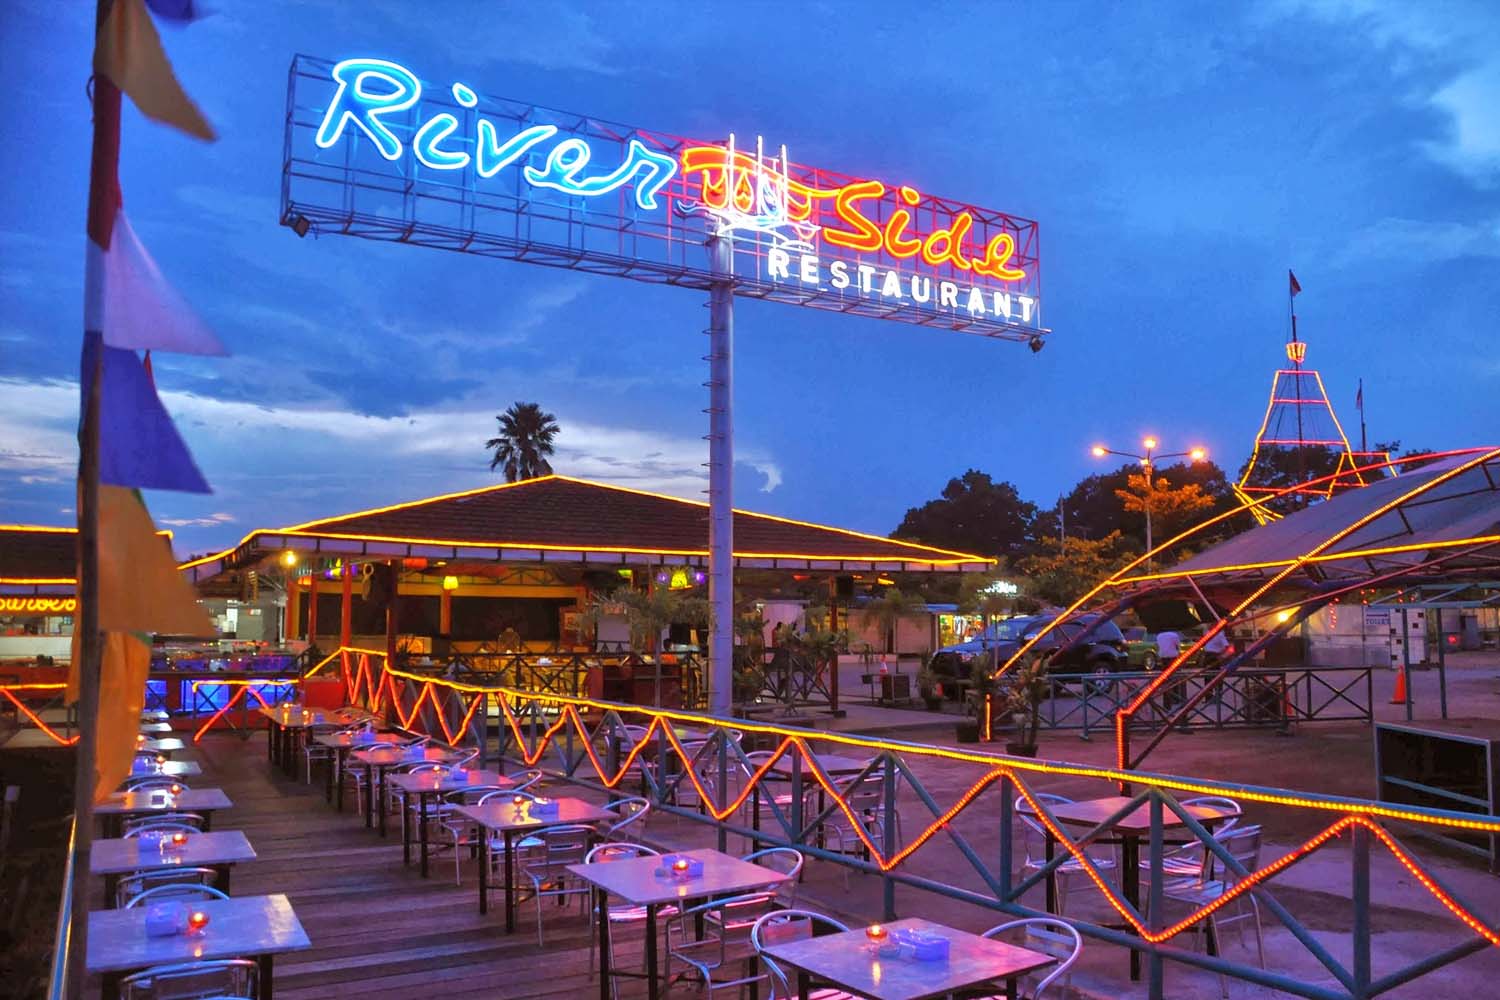 River Side Restaurant